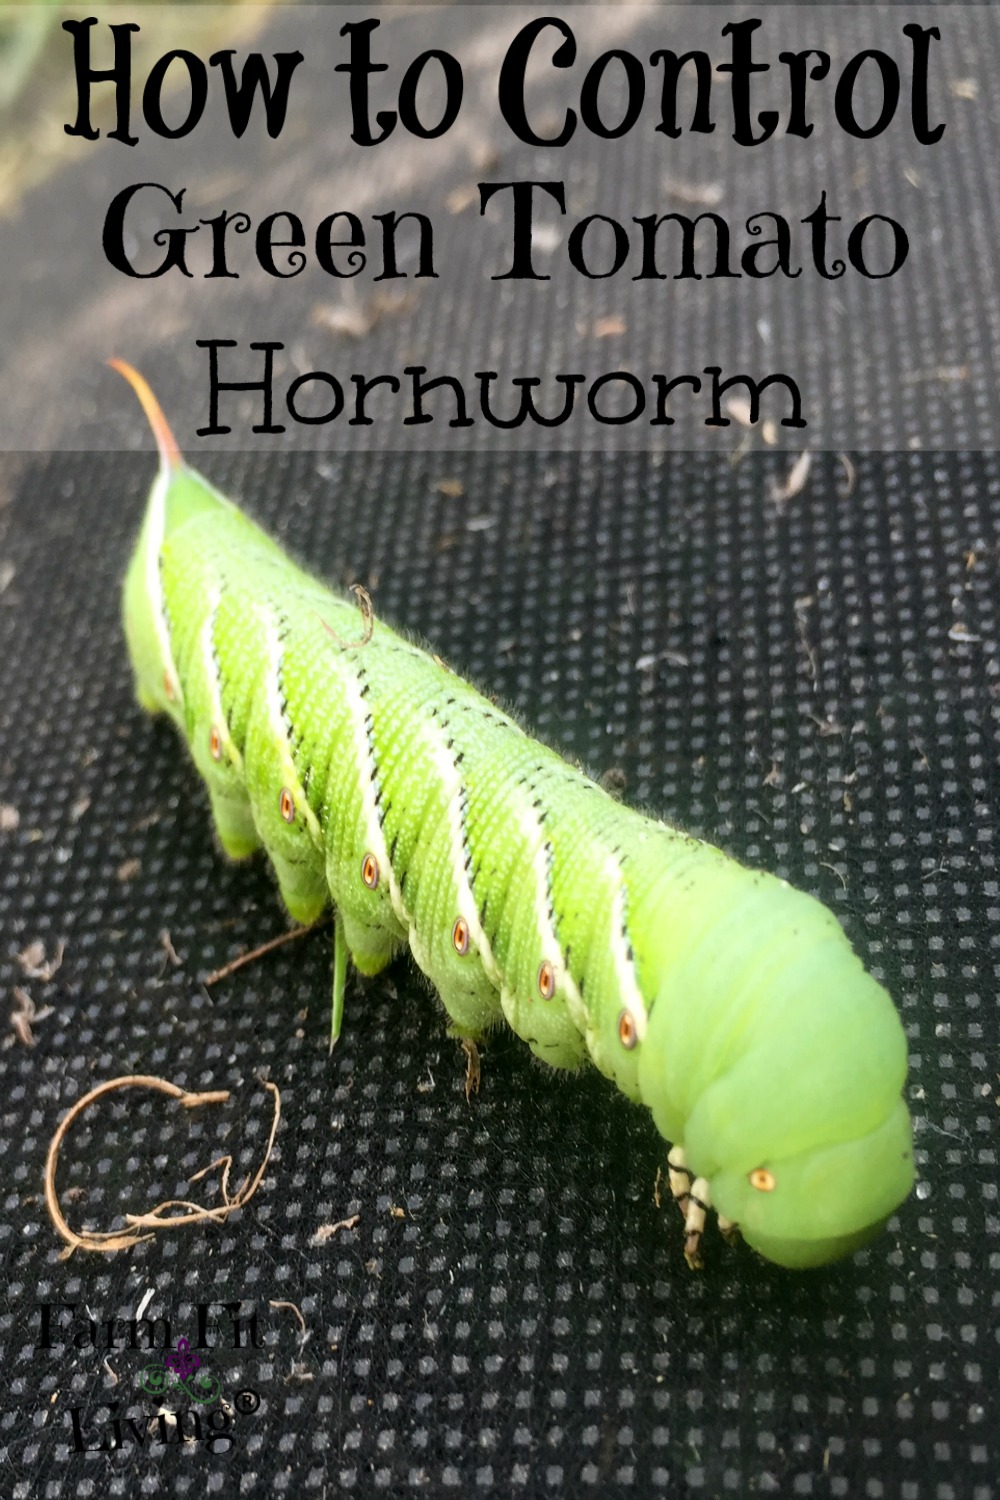 download tomato hornworm control